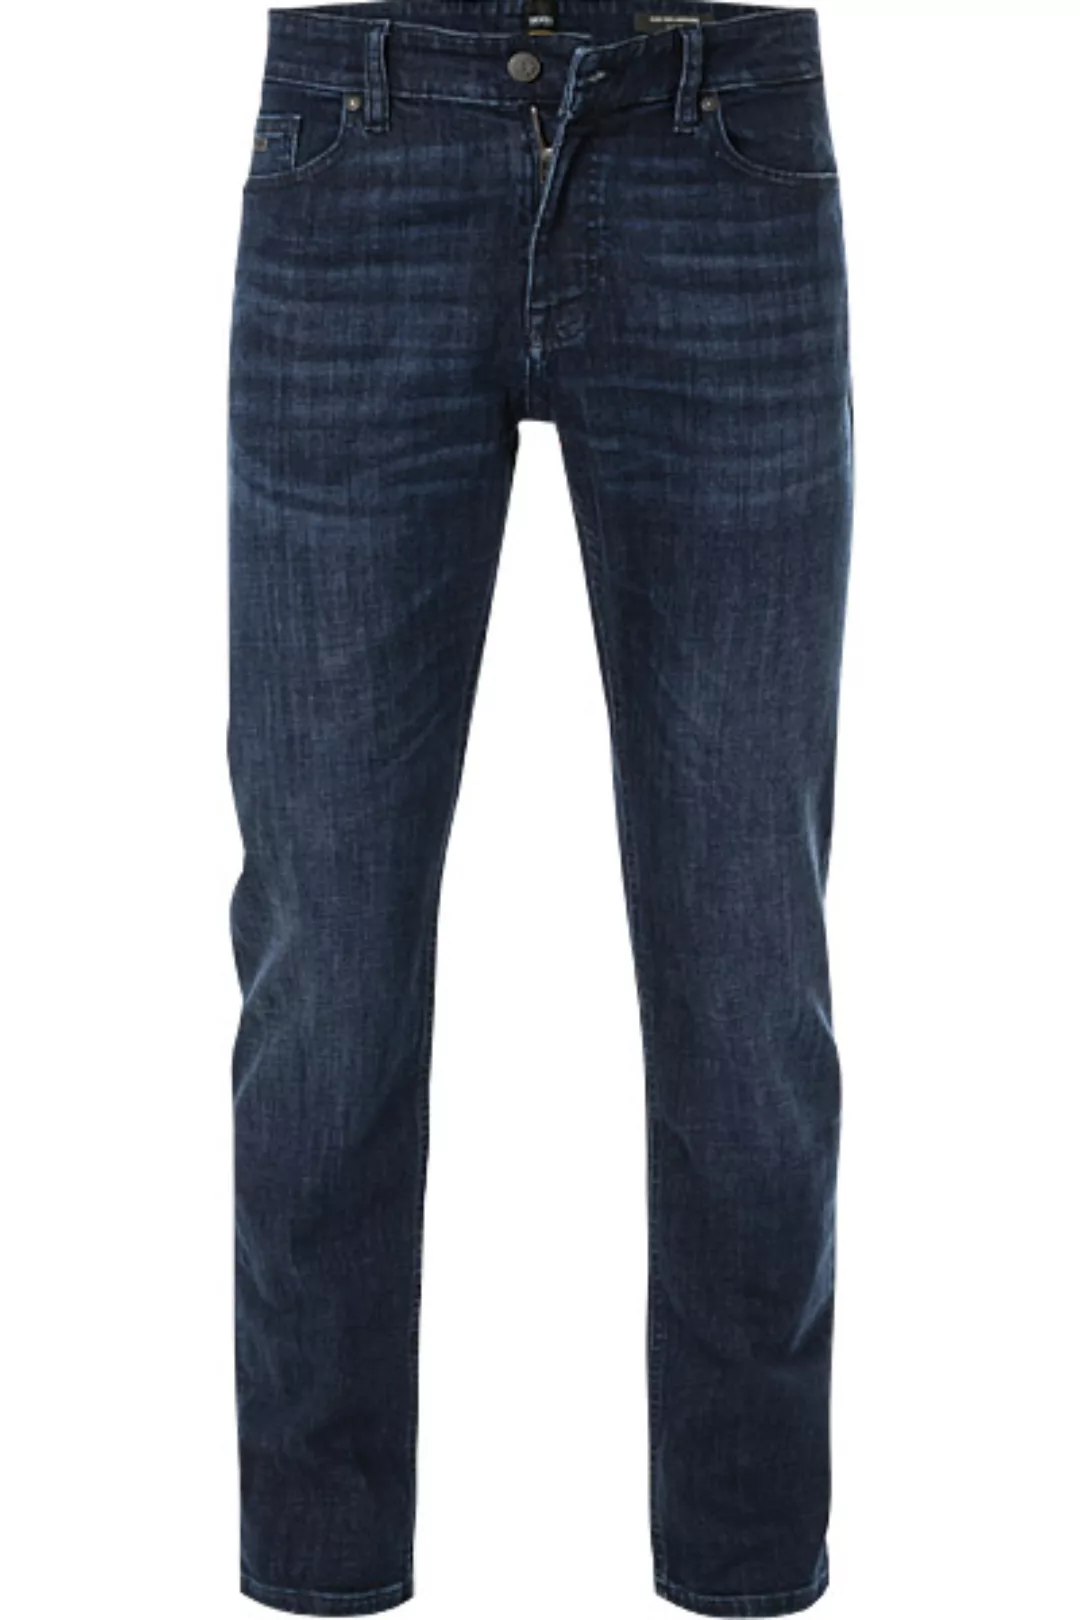 BOSS Jeans Delaware 50389665/417 günstig online kaufen